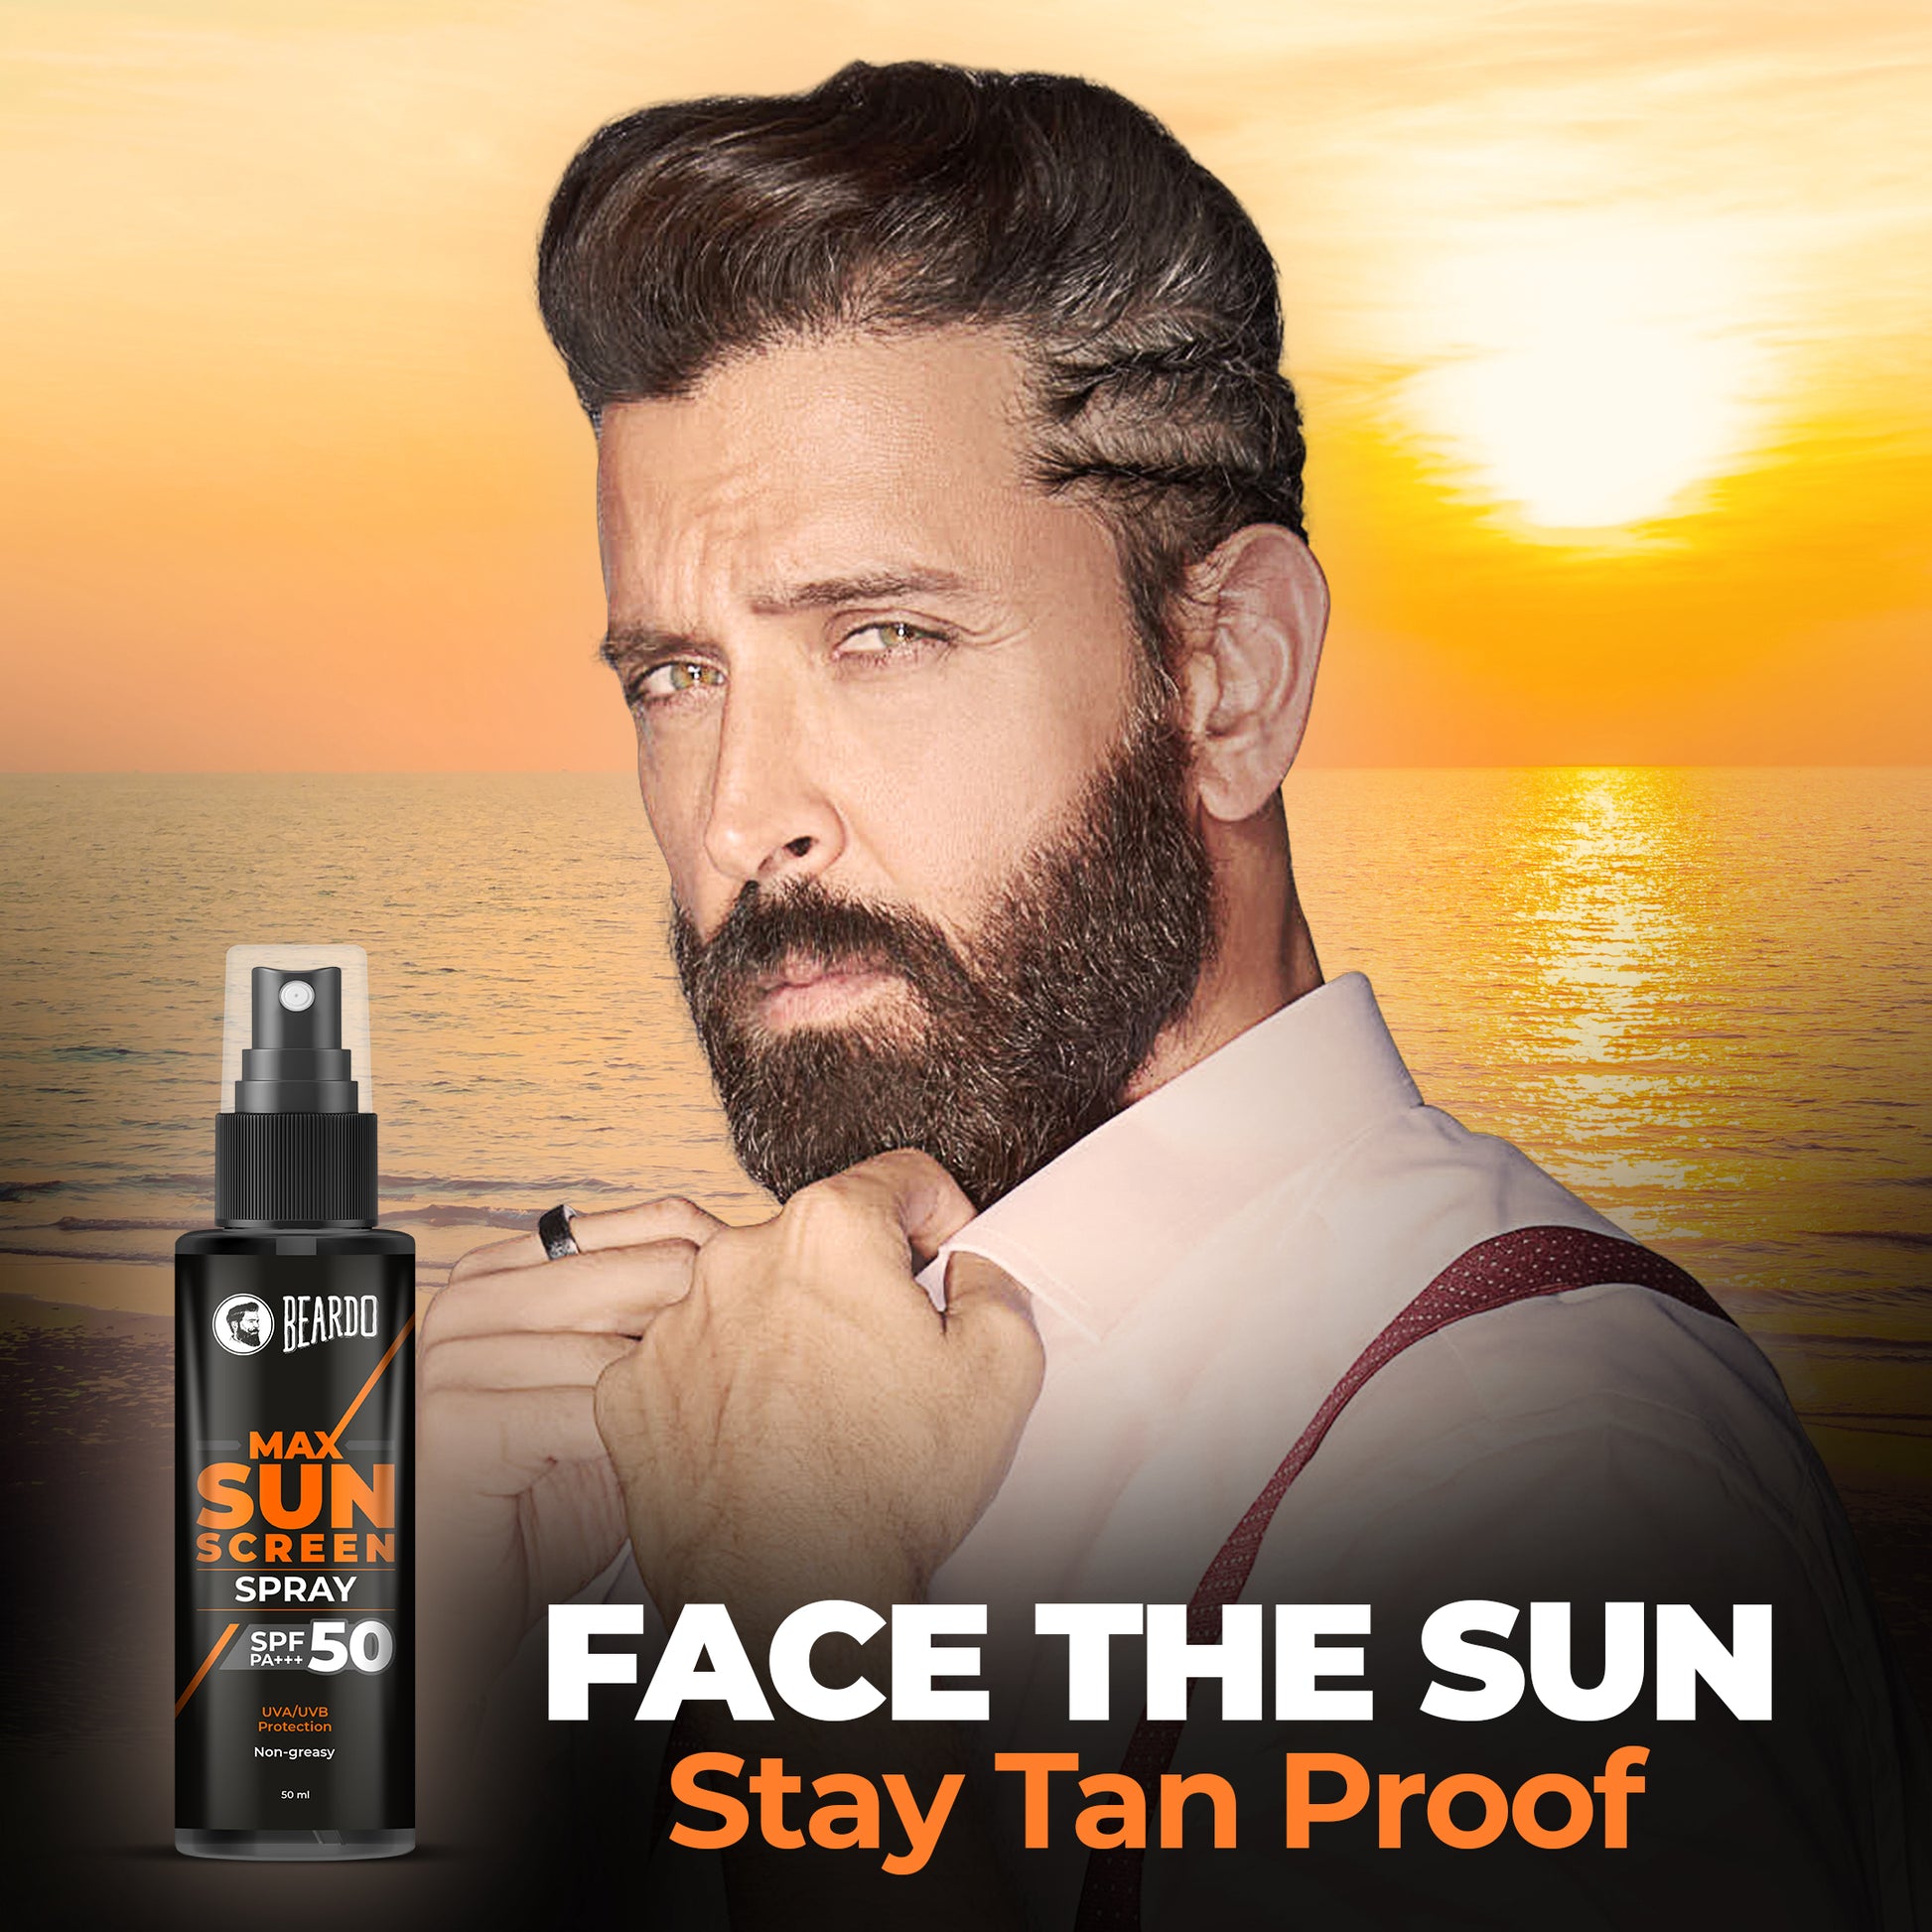 sun protection spray, sun protection men, tan proof